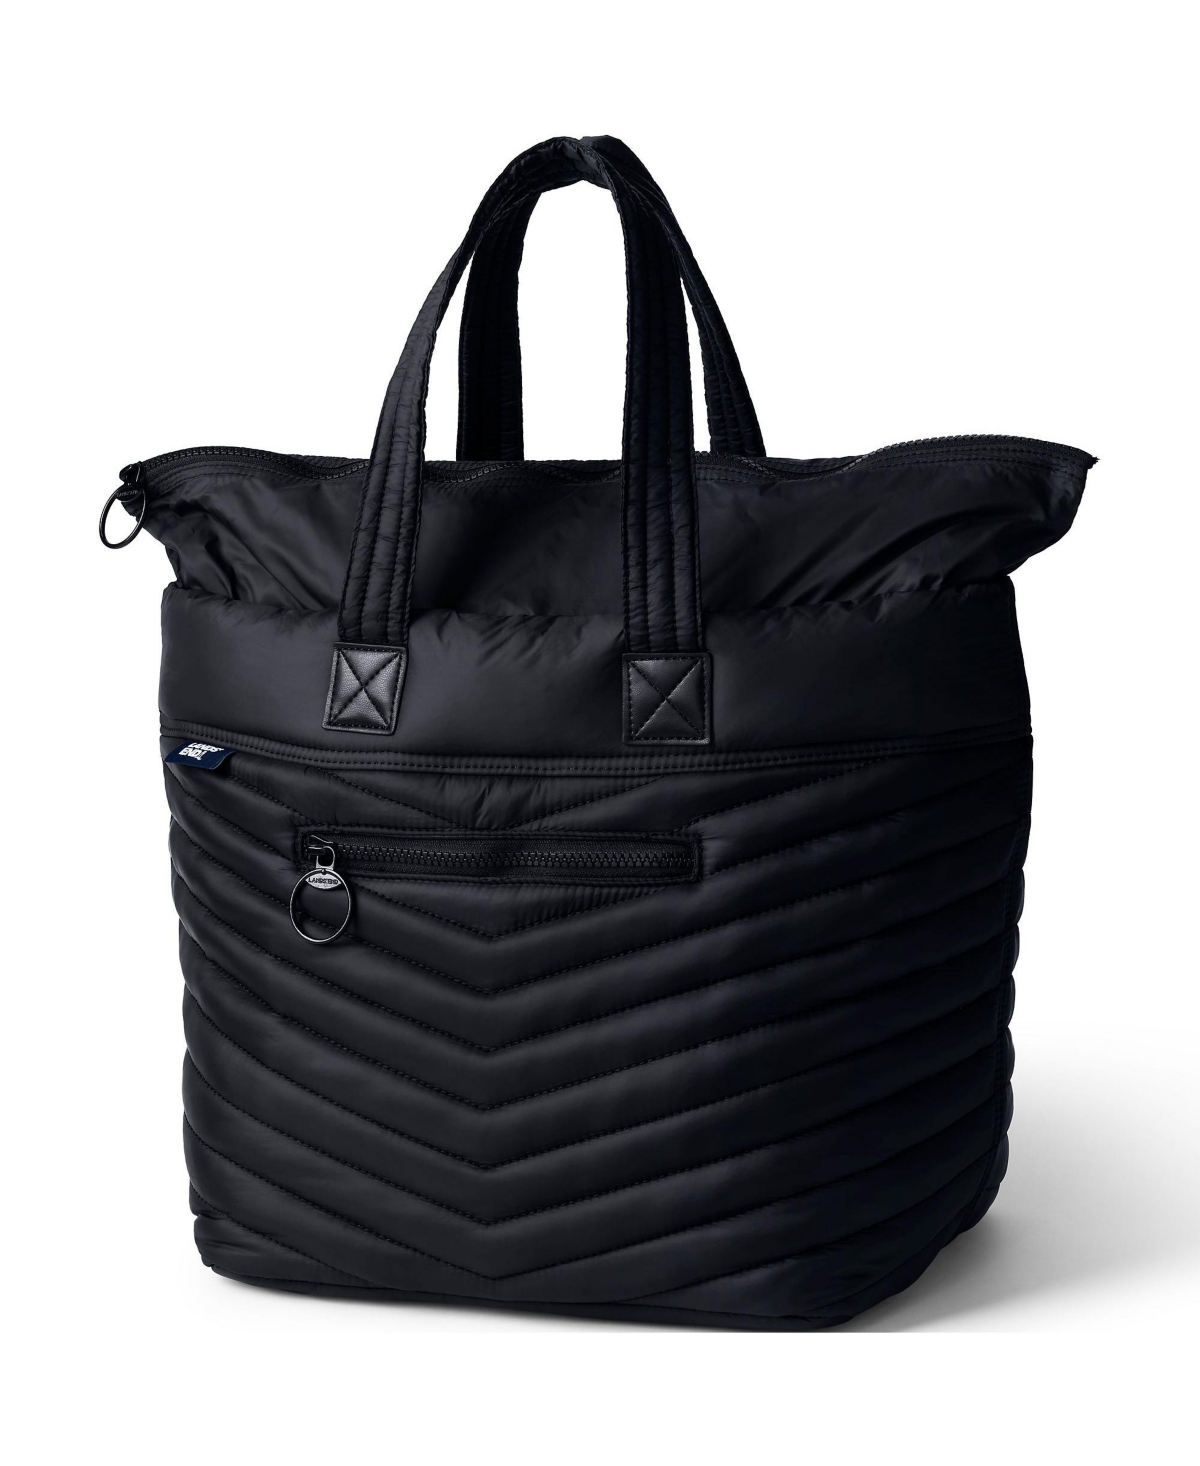 Ultralight Tote Bag - Black/black